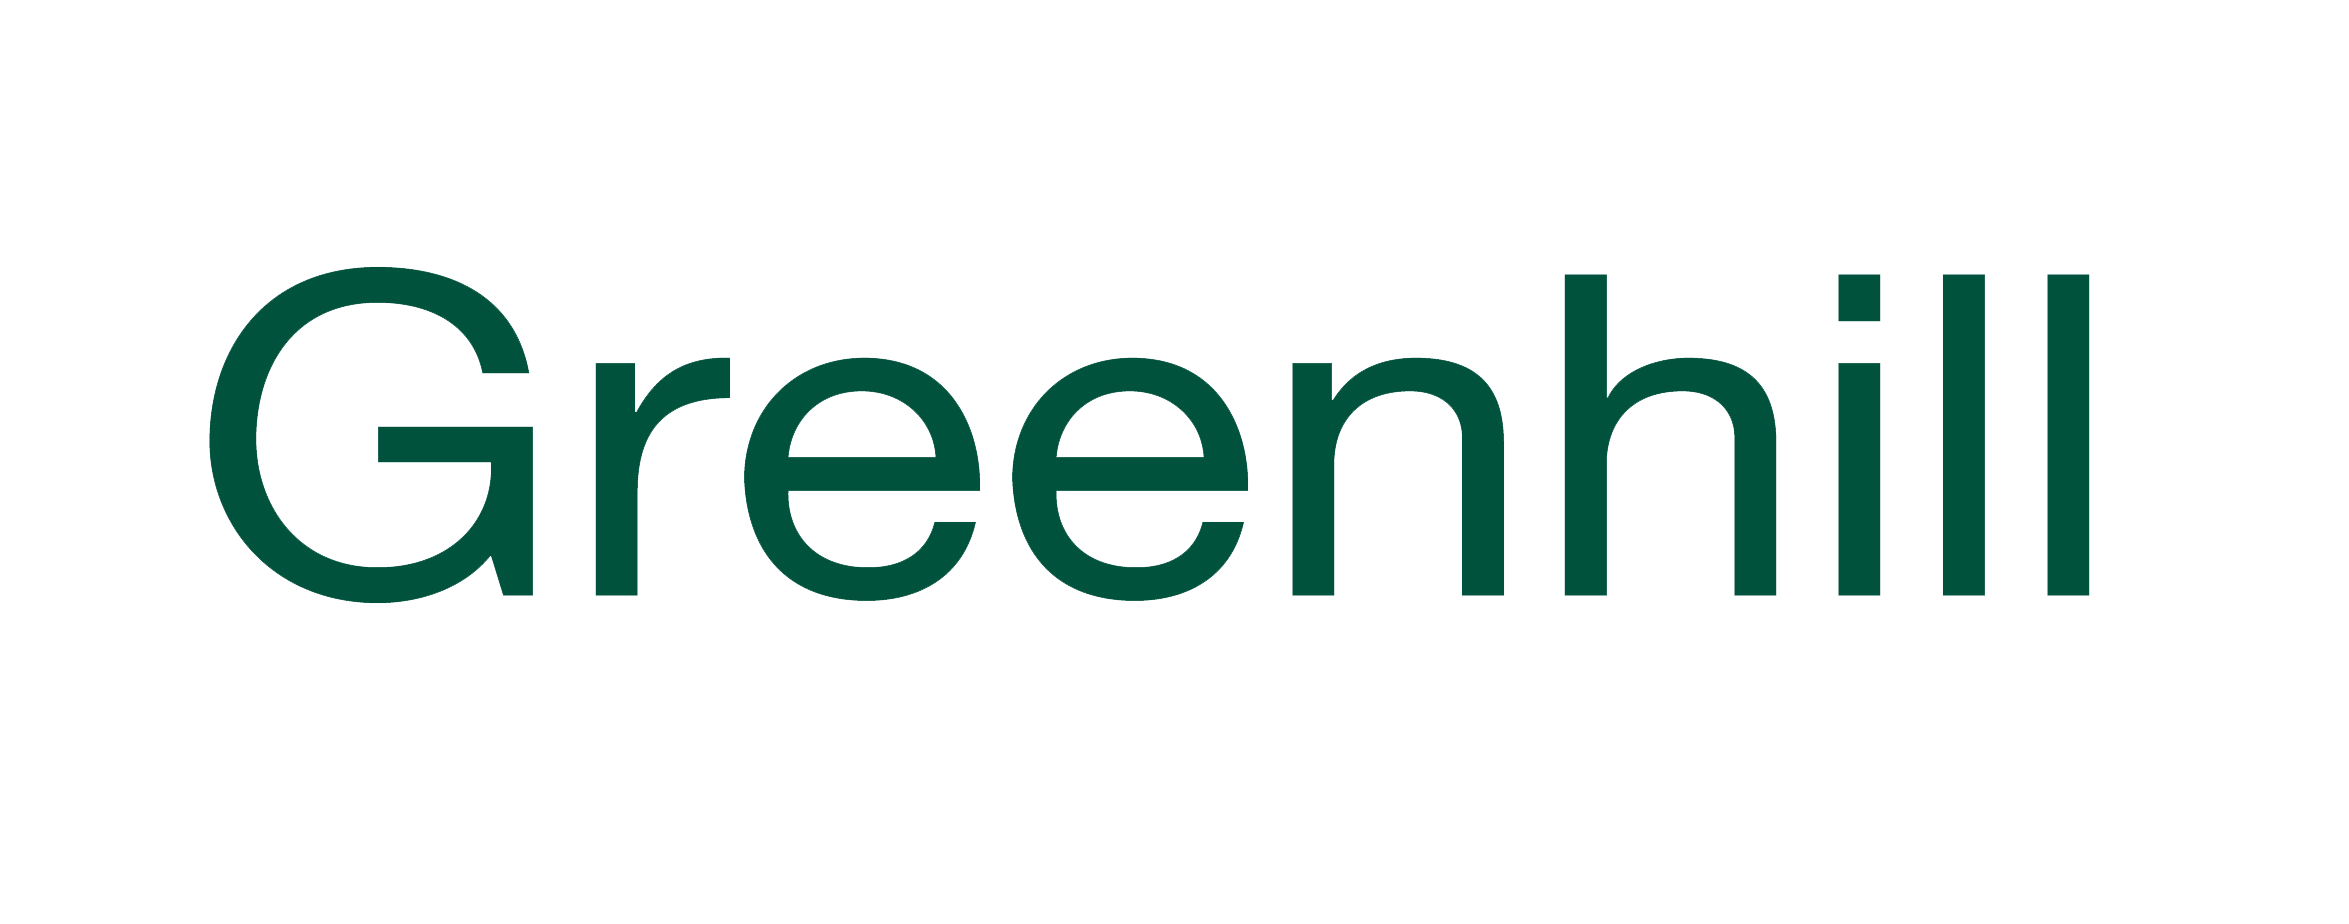 Greenhill logo